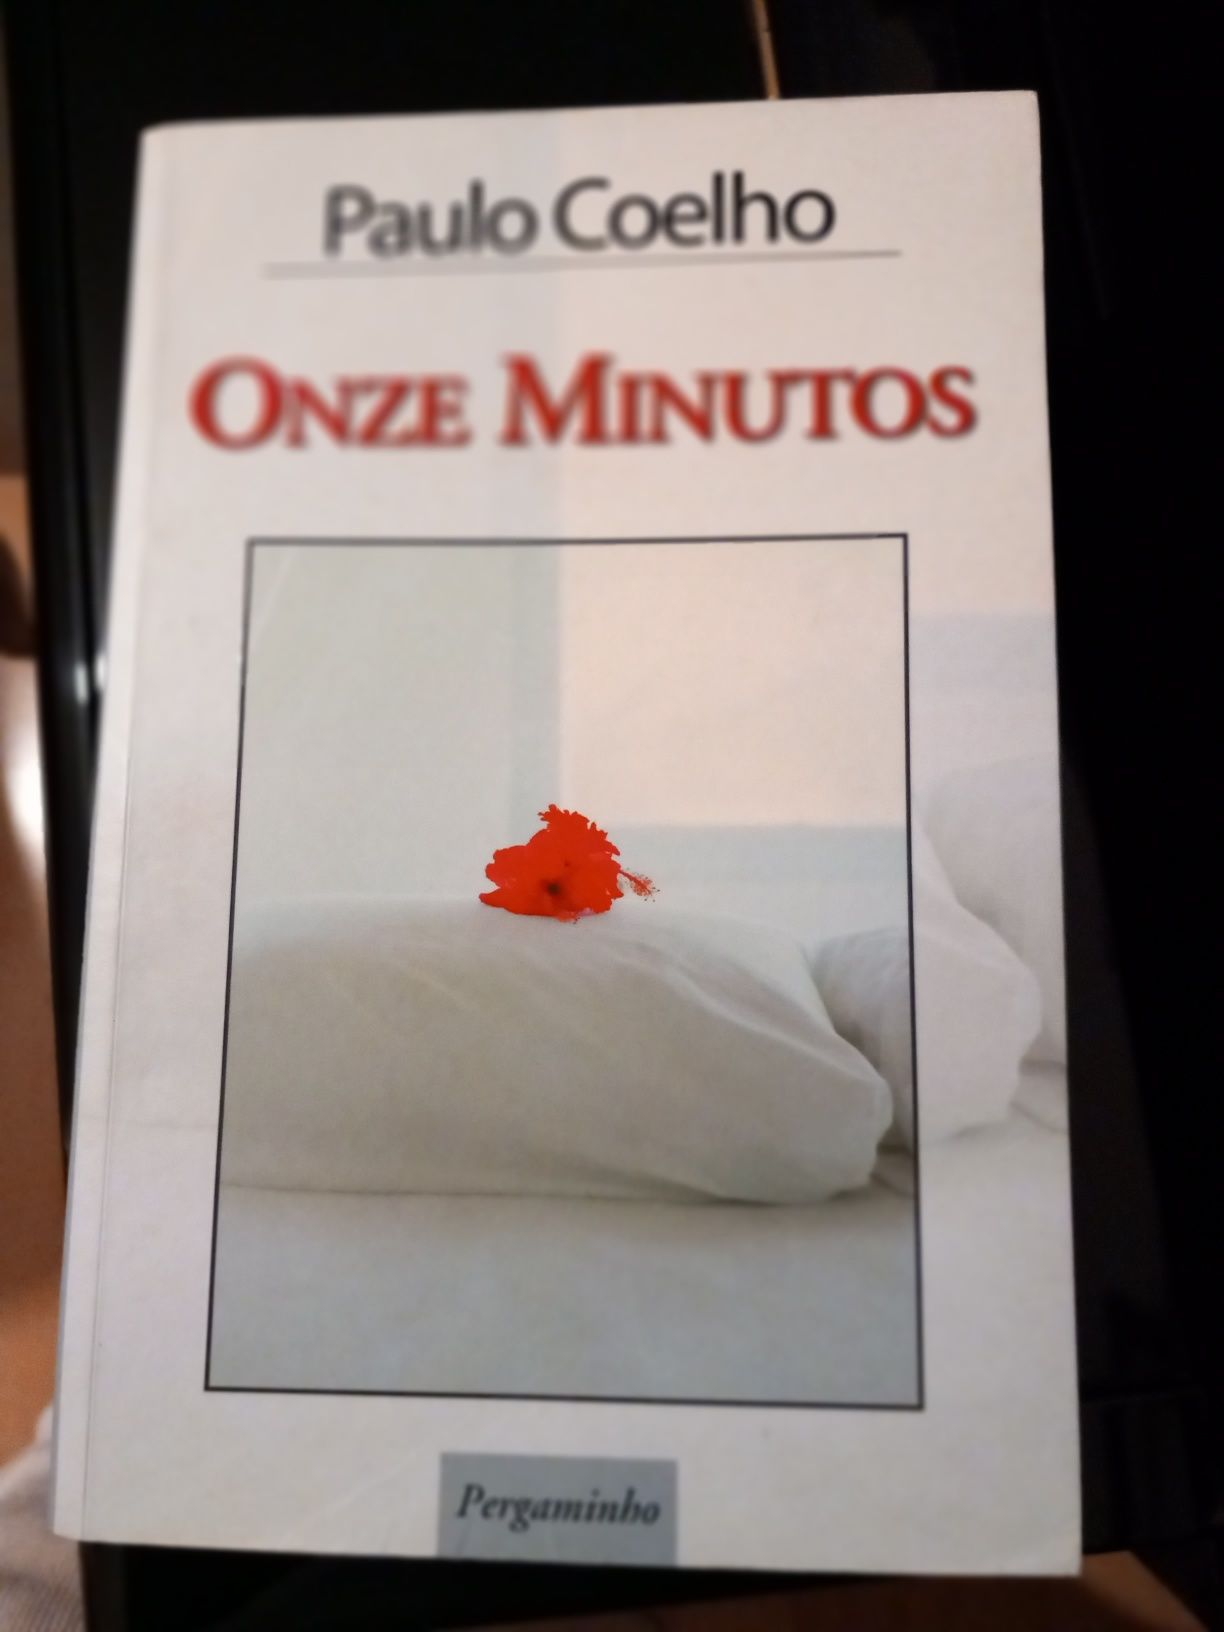 Livro Paulo Coelho Onze minutos